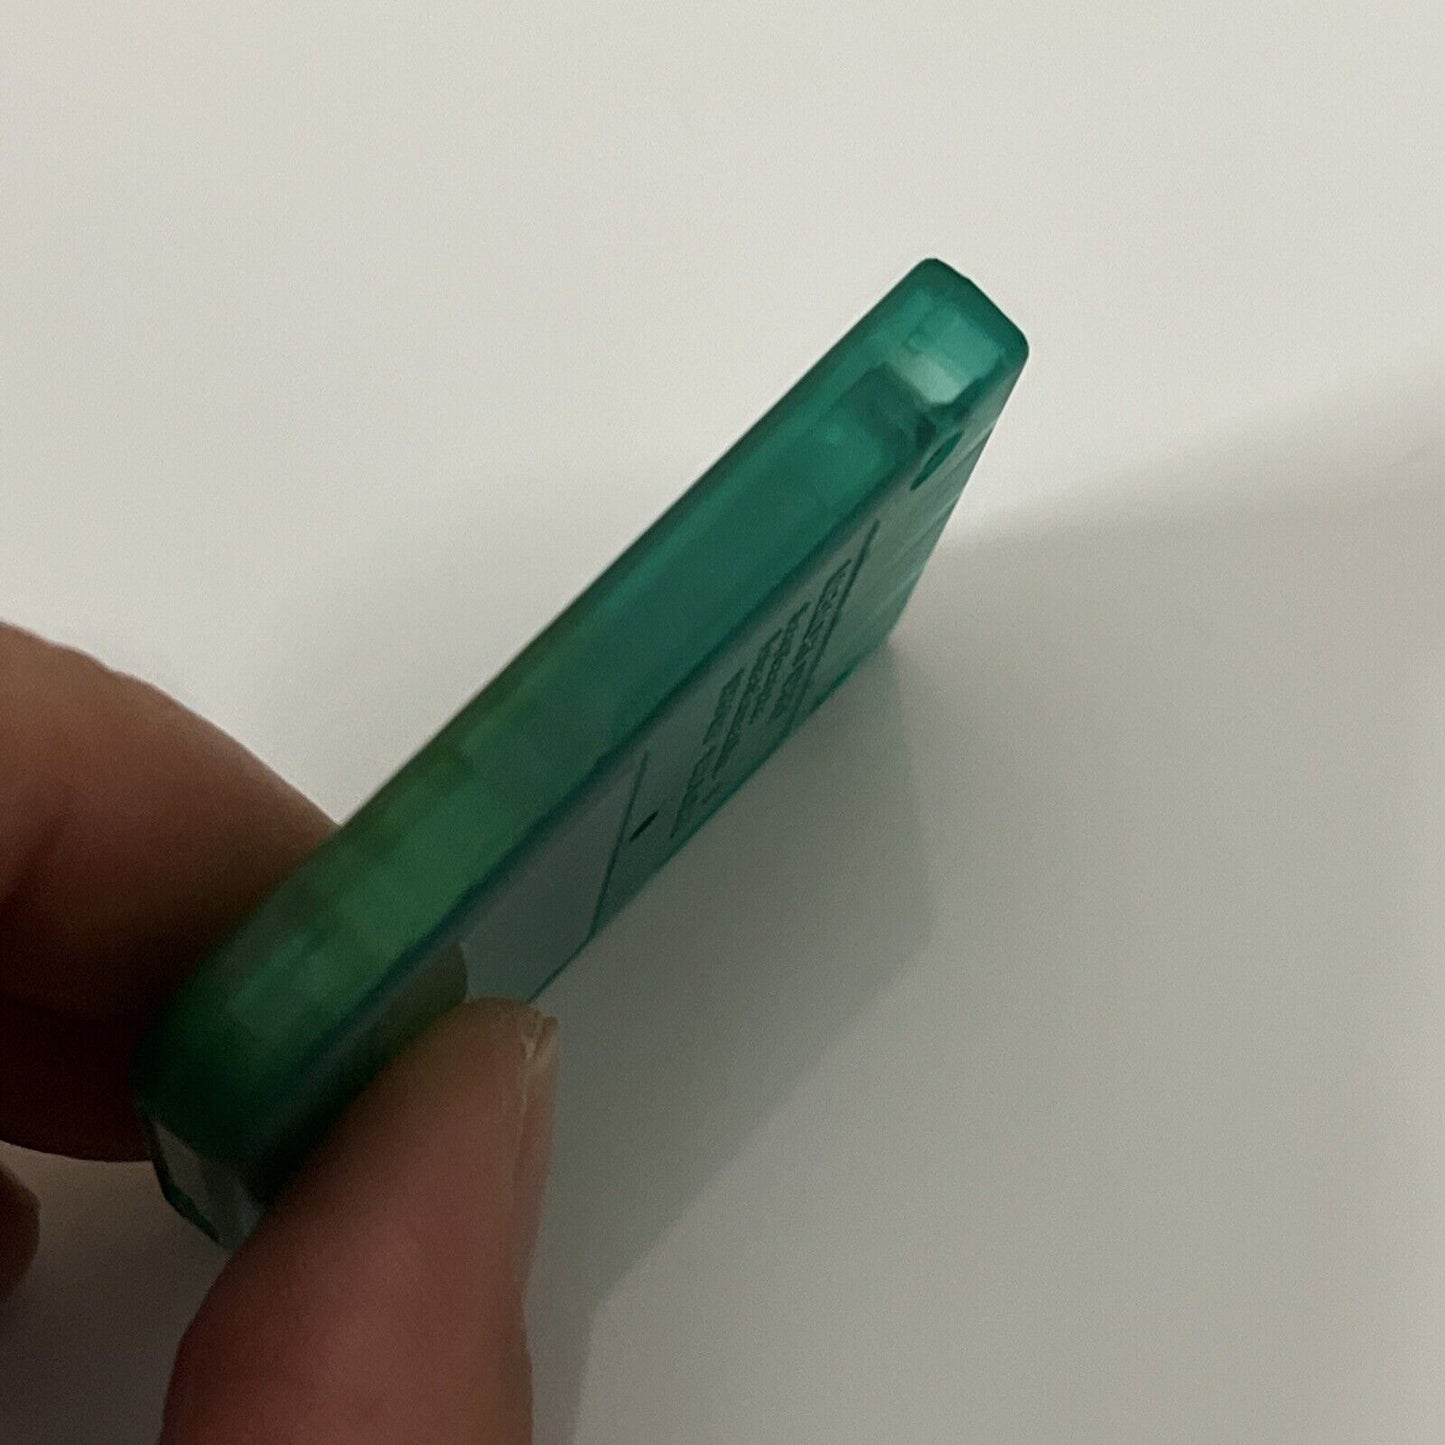 Official Sony Playstation PS1 Memory Card 1MB SCPH-1020 Green Aqua Transparent